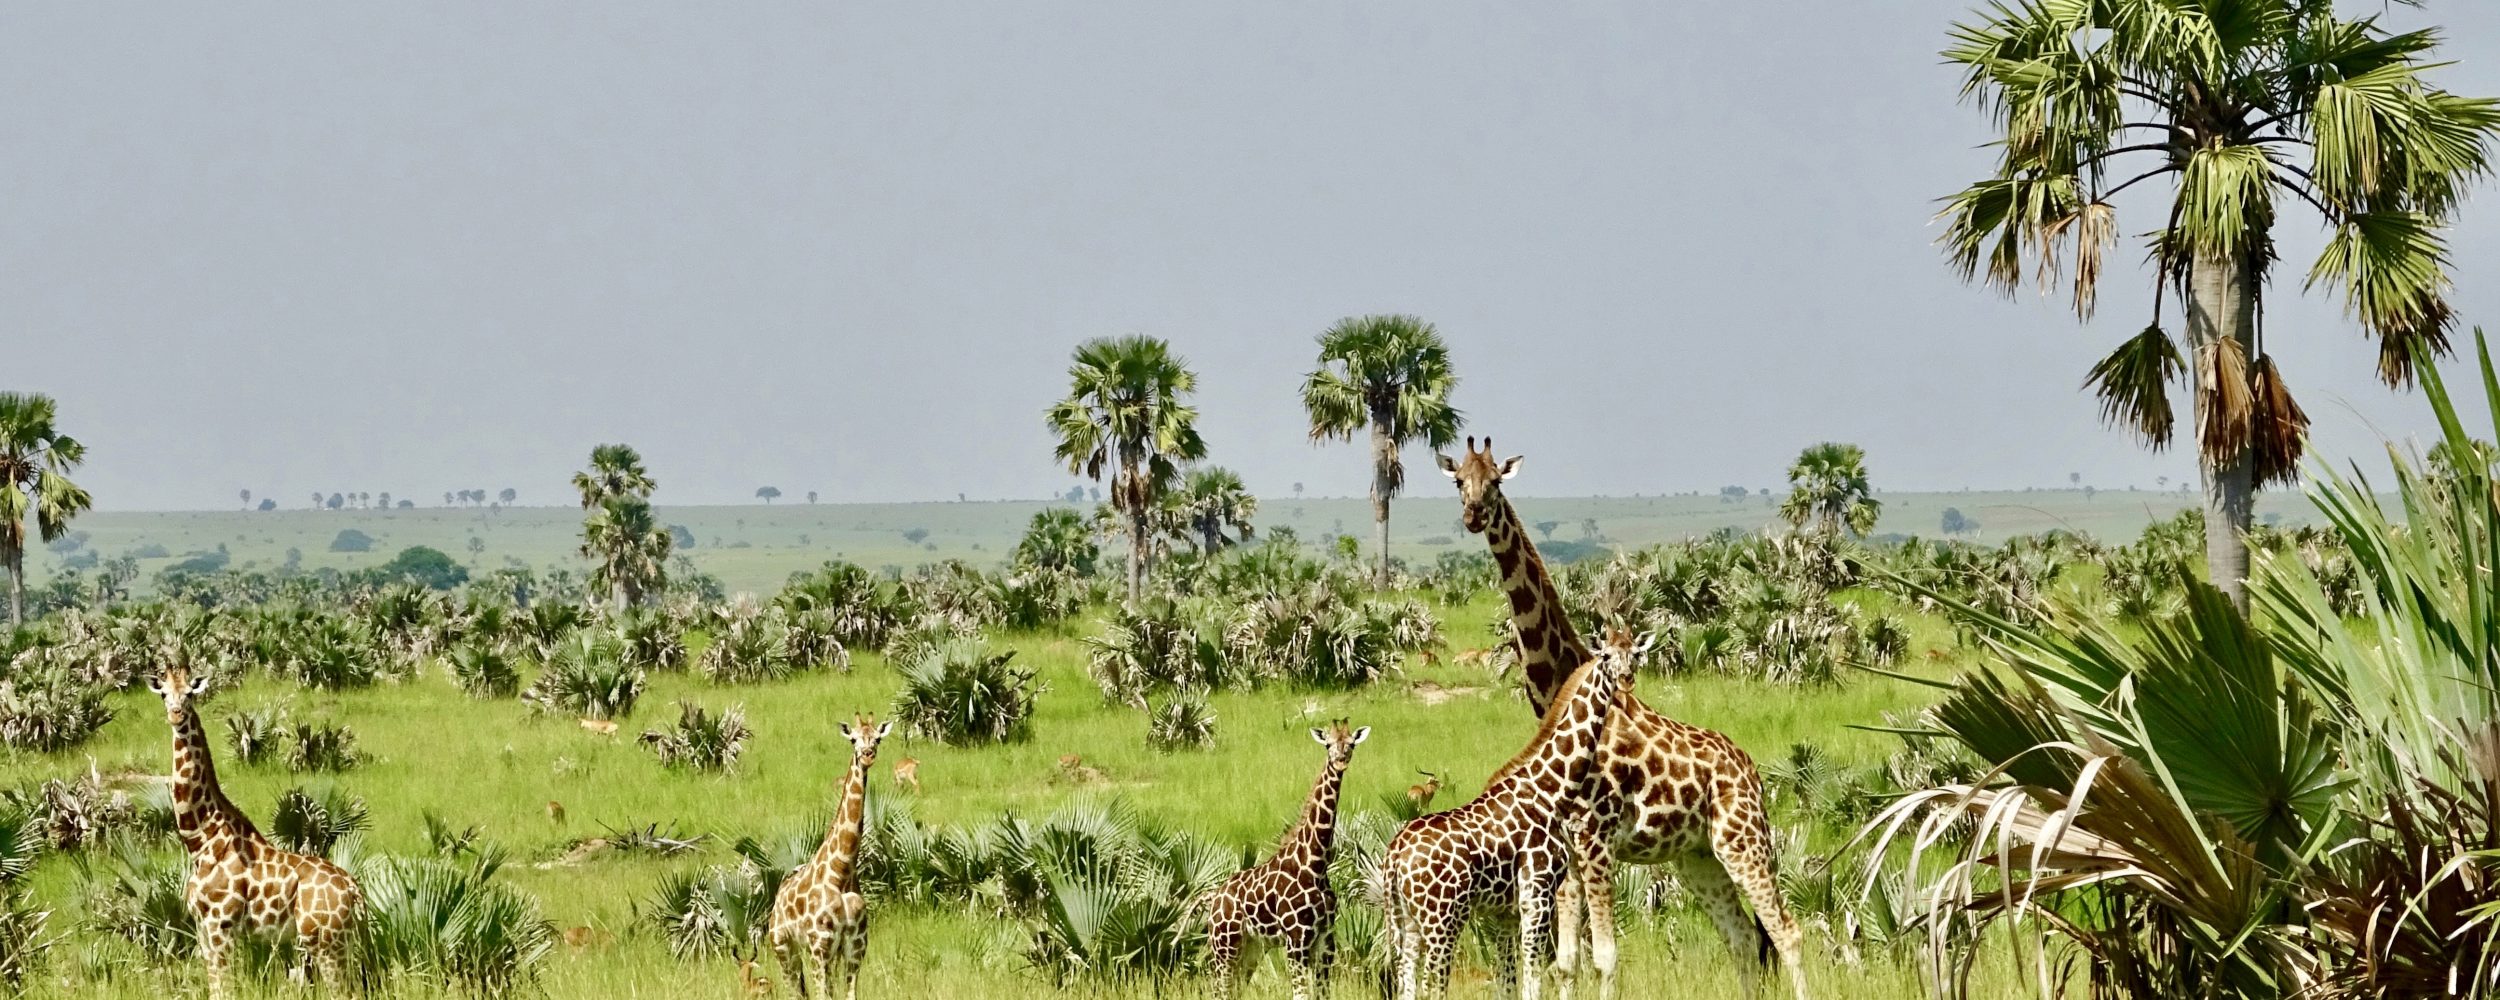 murchison nasjonalpark uganda giraff